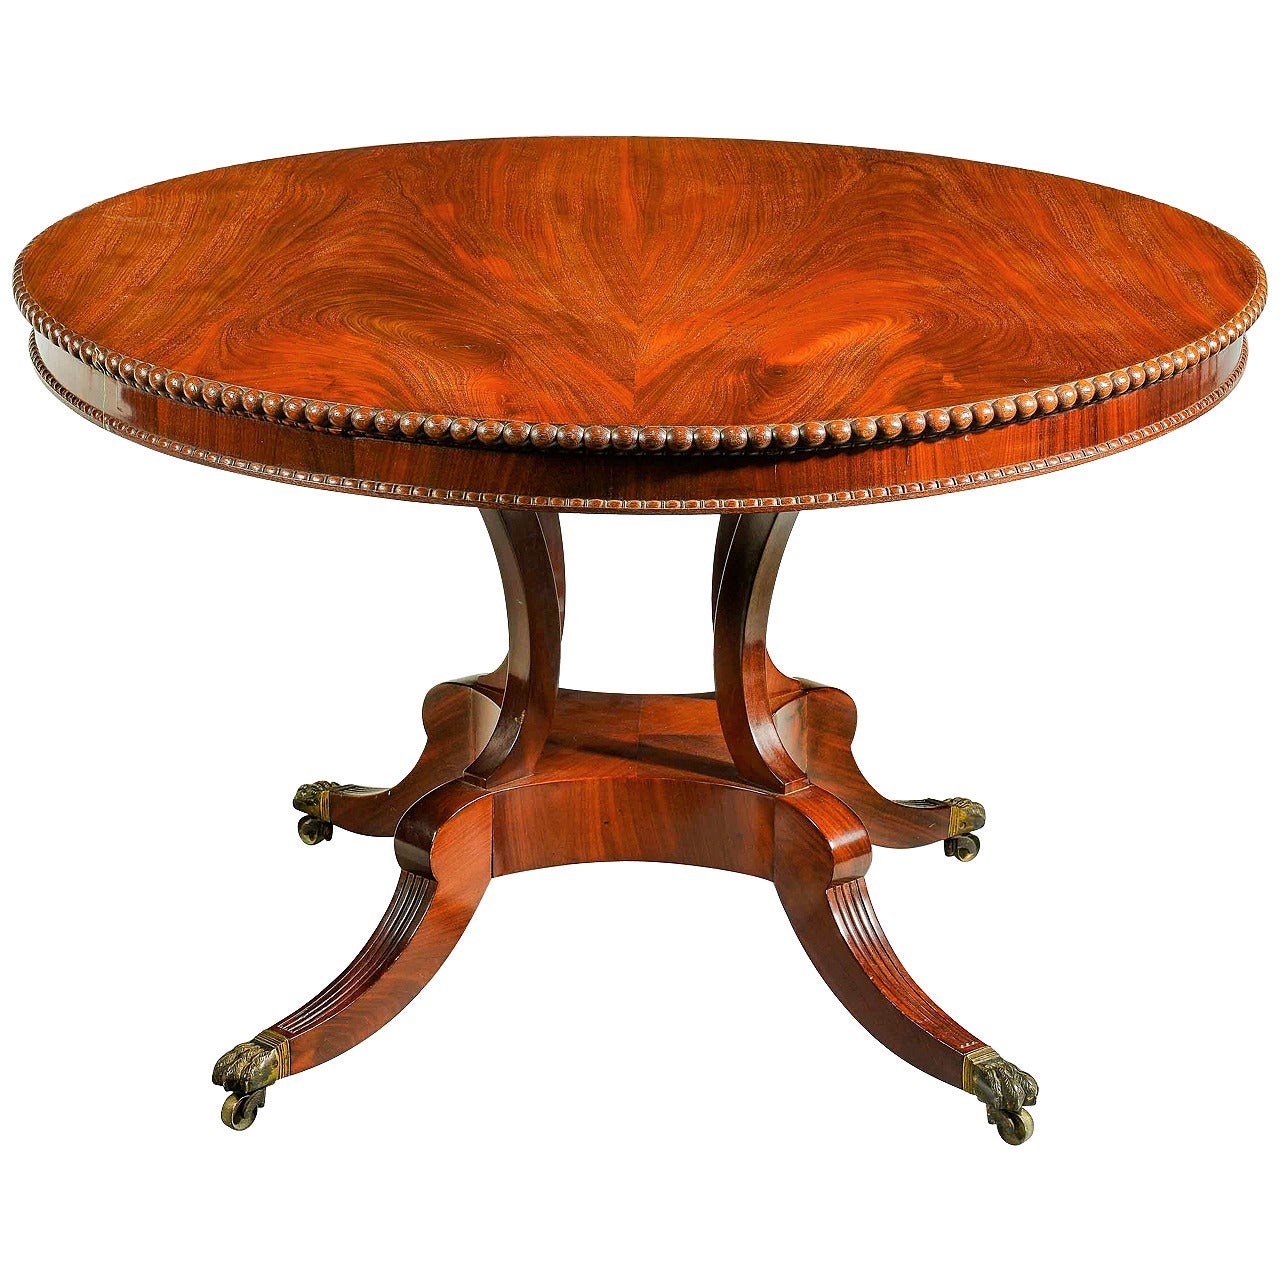 Regency Period Mahogany Circular Table